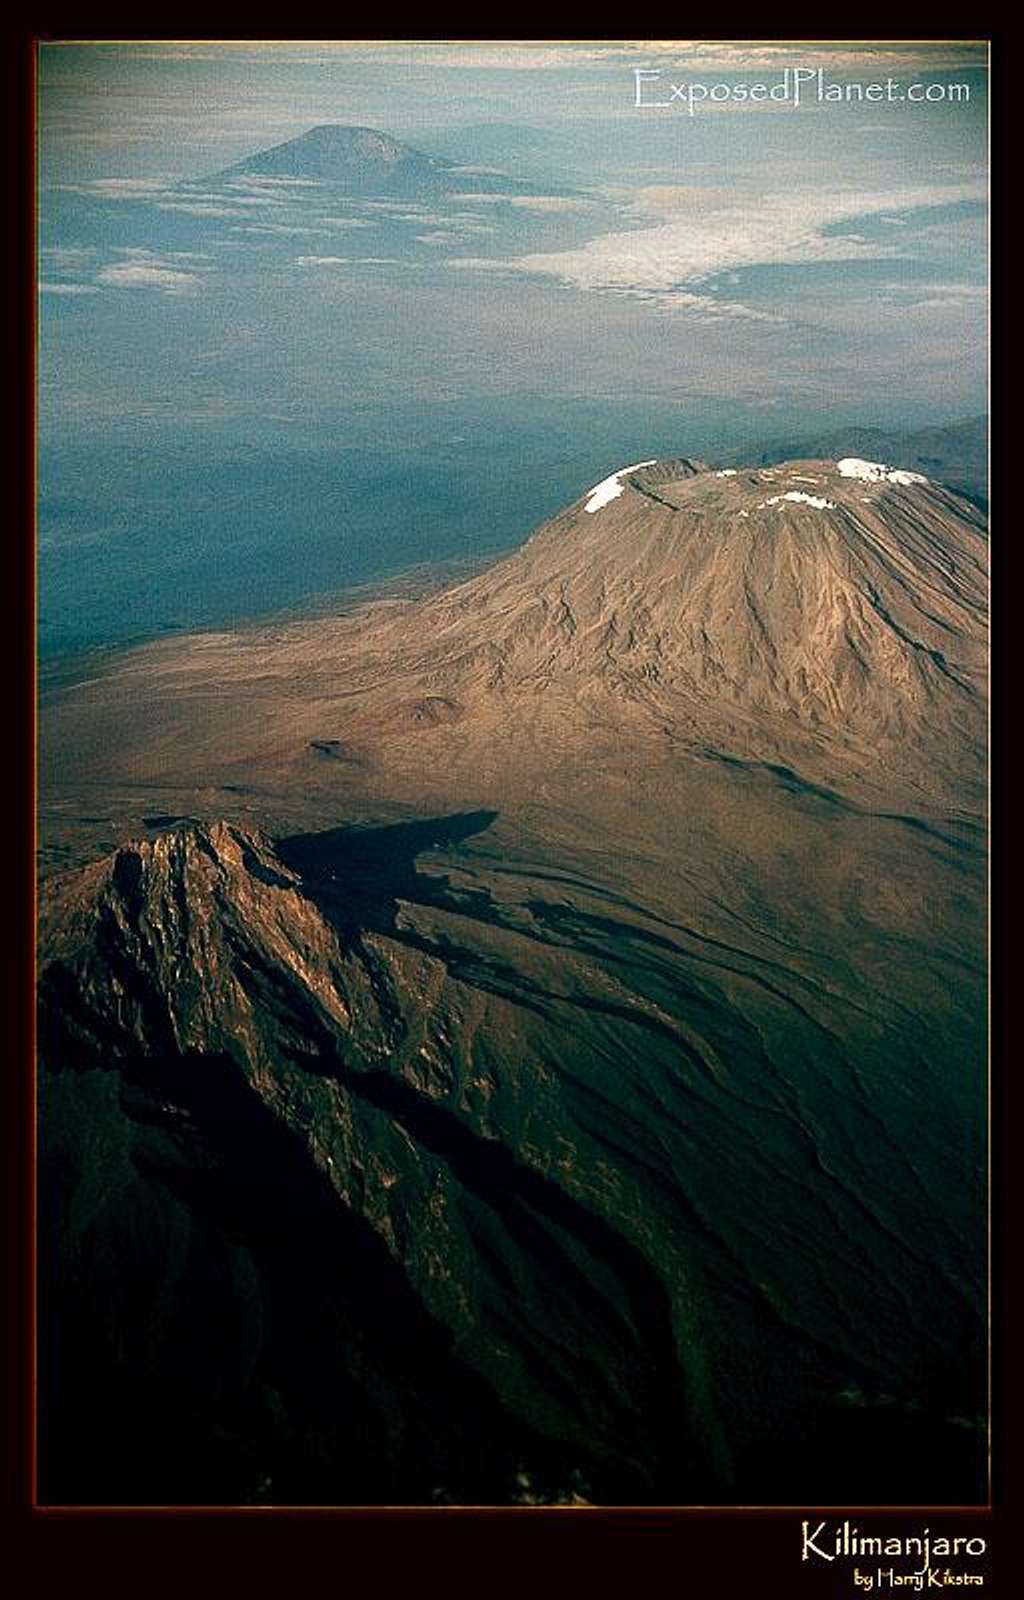 Kilimanjaro from the air, 2003